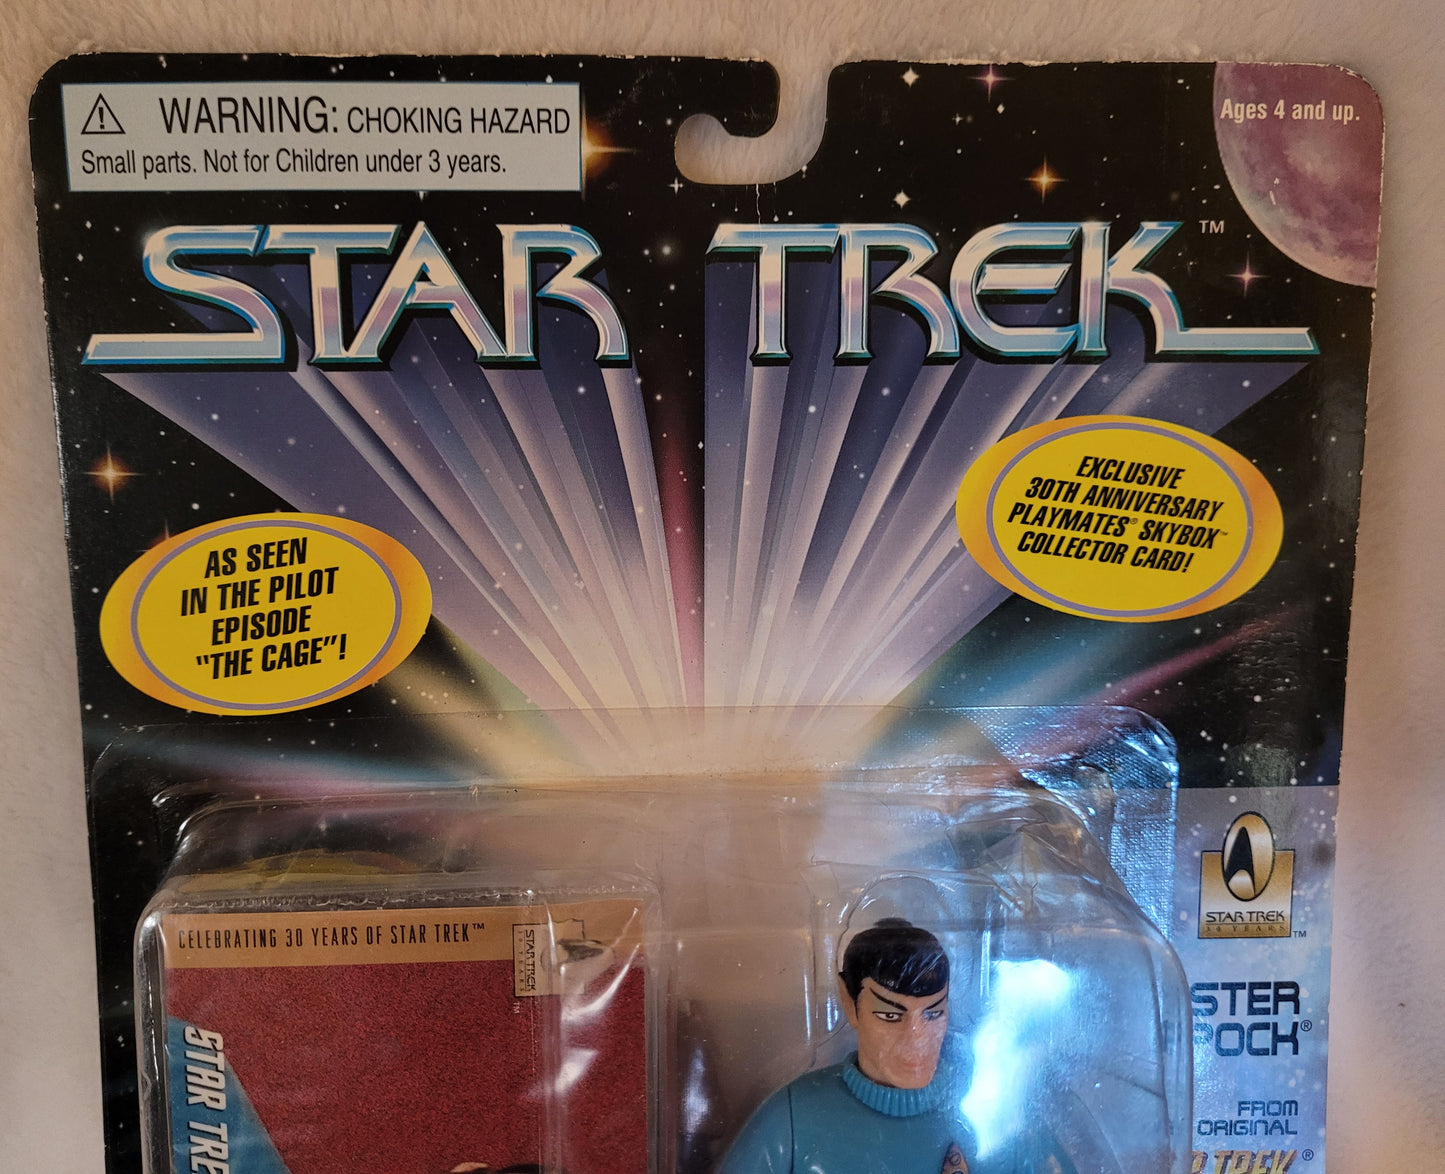 Vintage *Star Trek: Mister Spoch Figure w/ 30th Anniv.